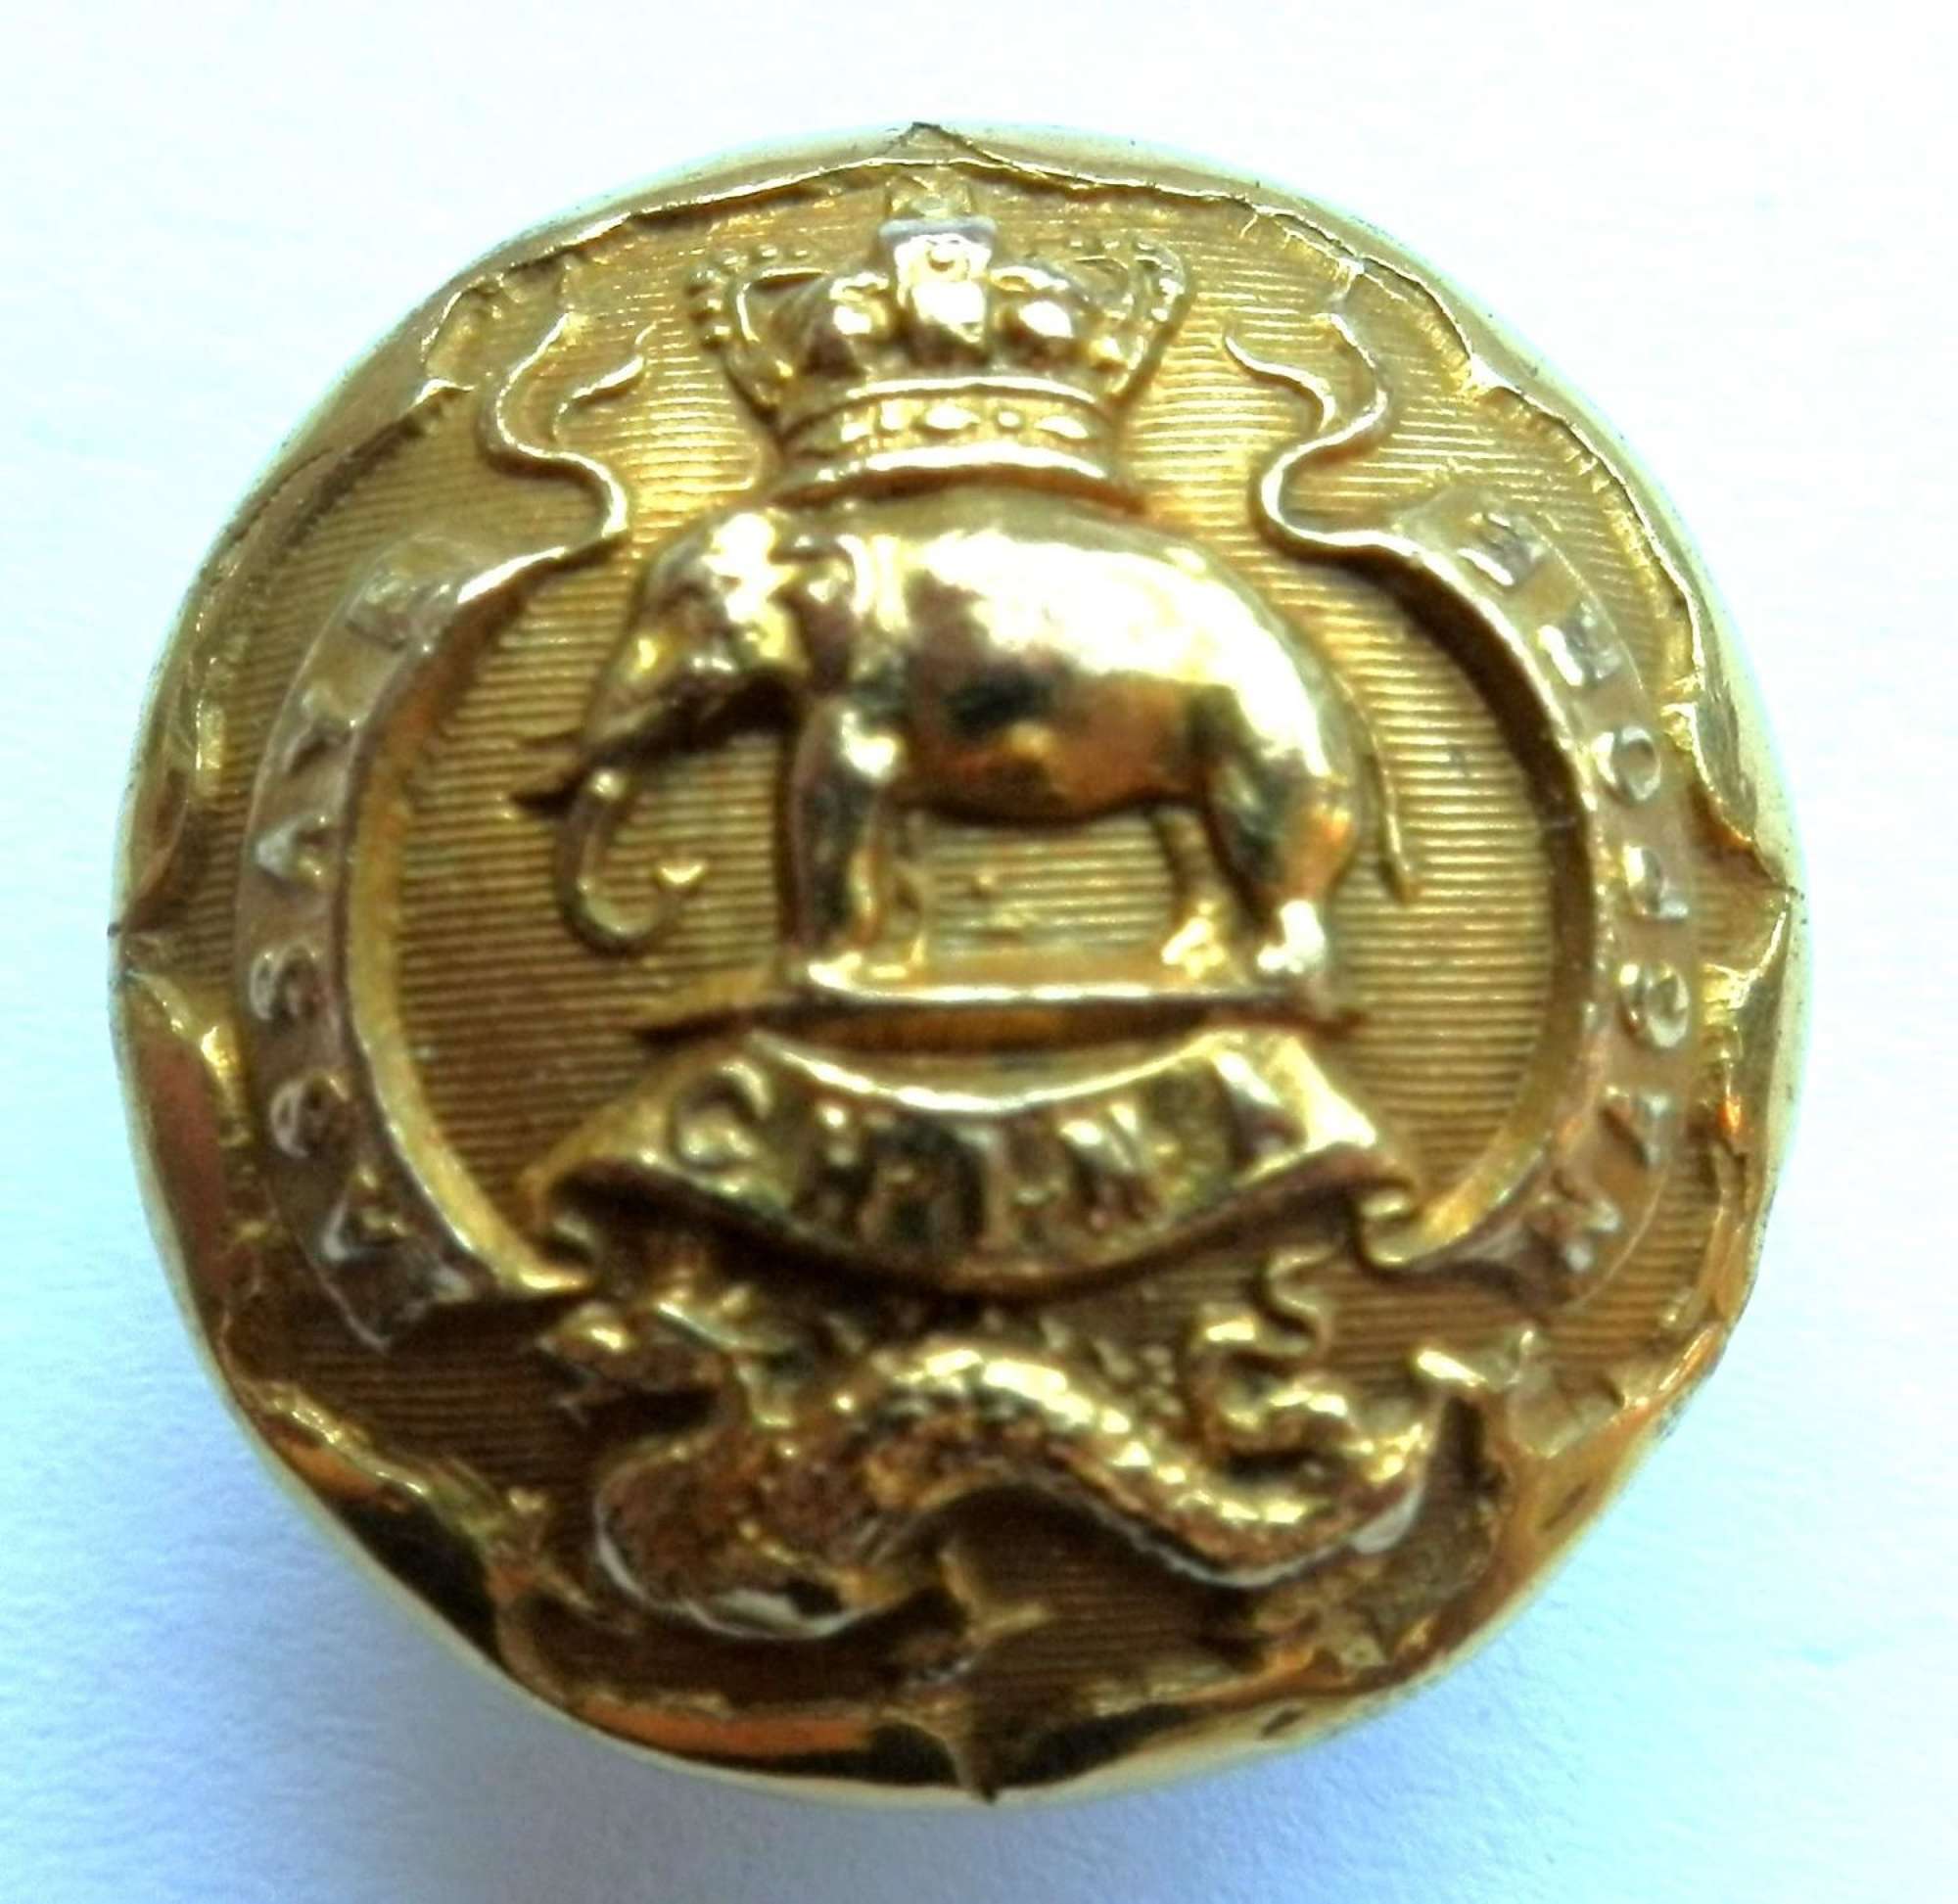 2nd Regt. Madras Infantry Button.